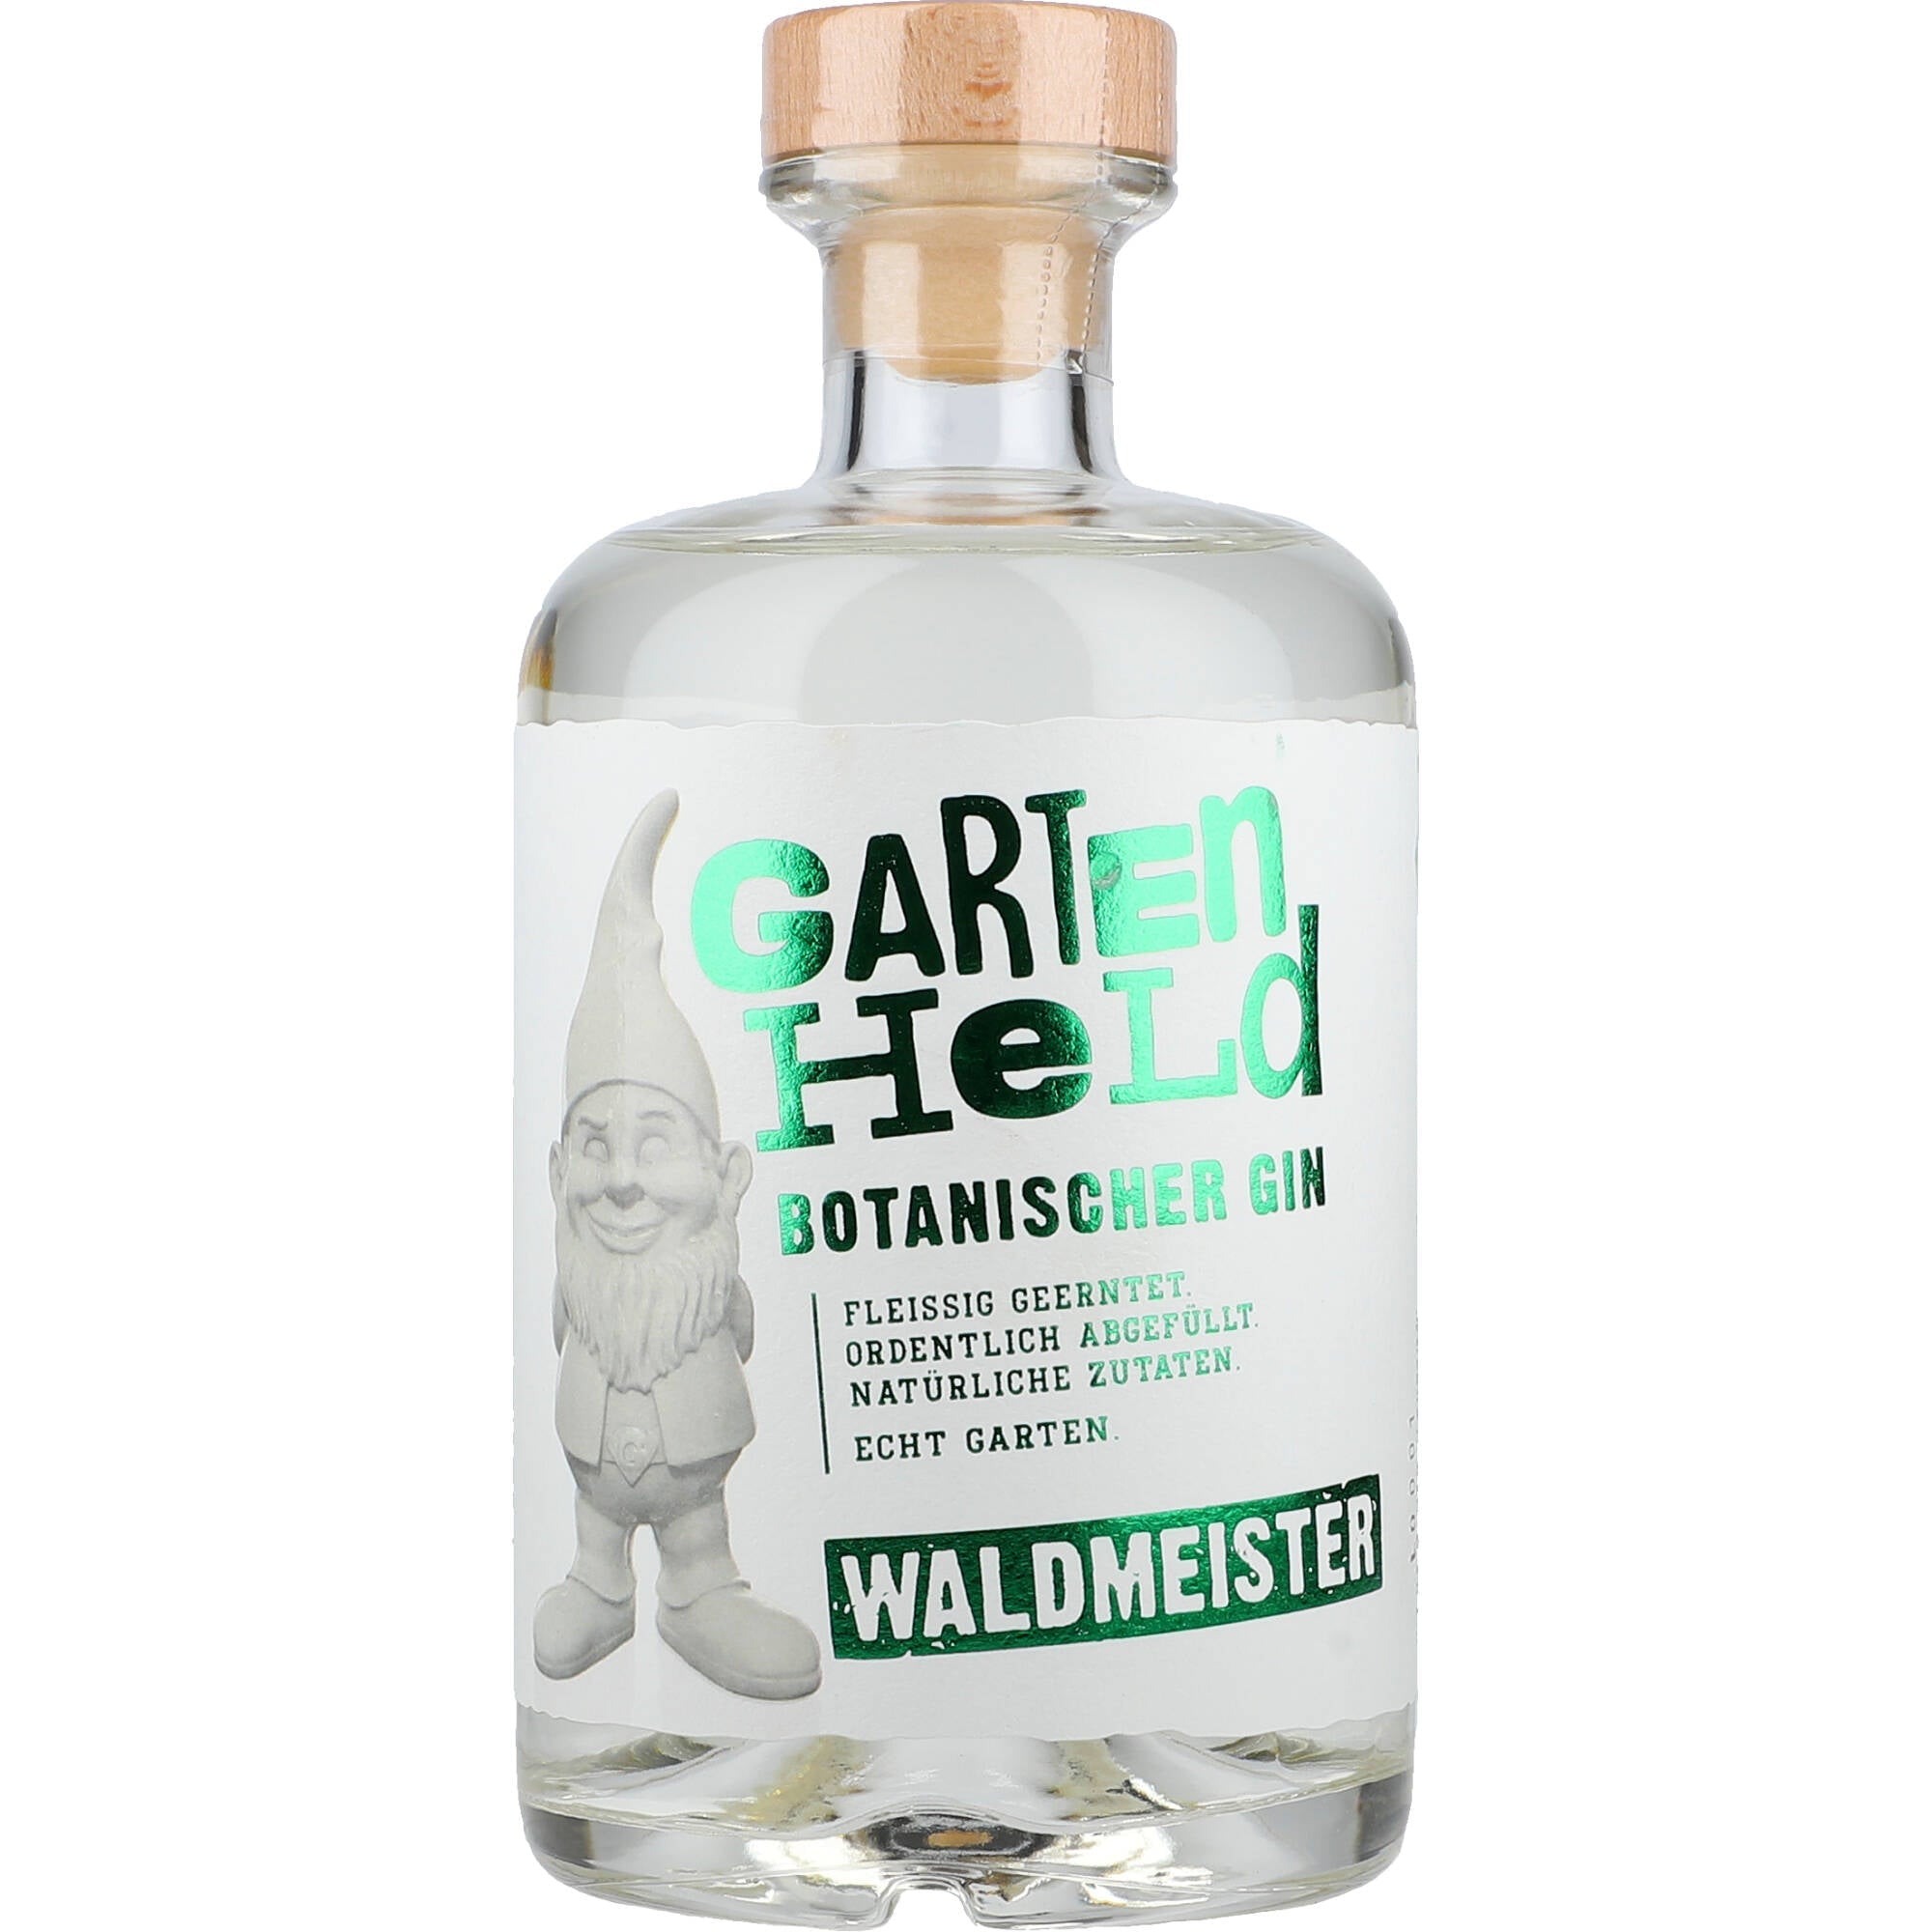 Waldmeister Gin AllSpirits 0,5 ltr. – Gartenheld 37,5%